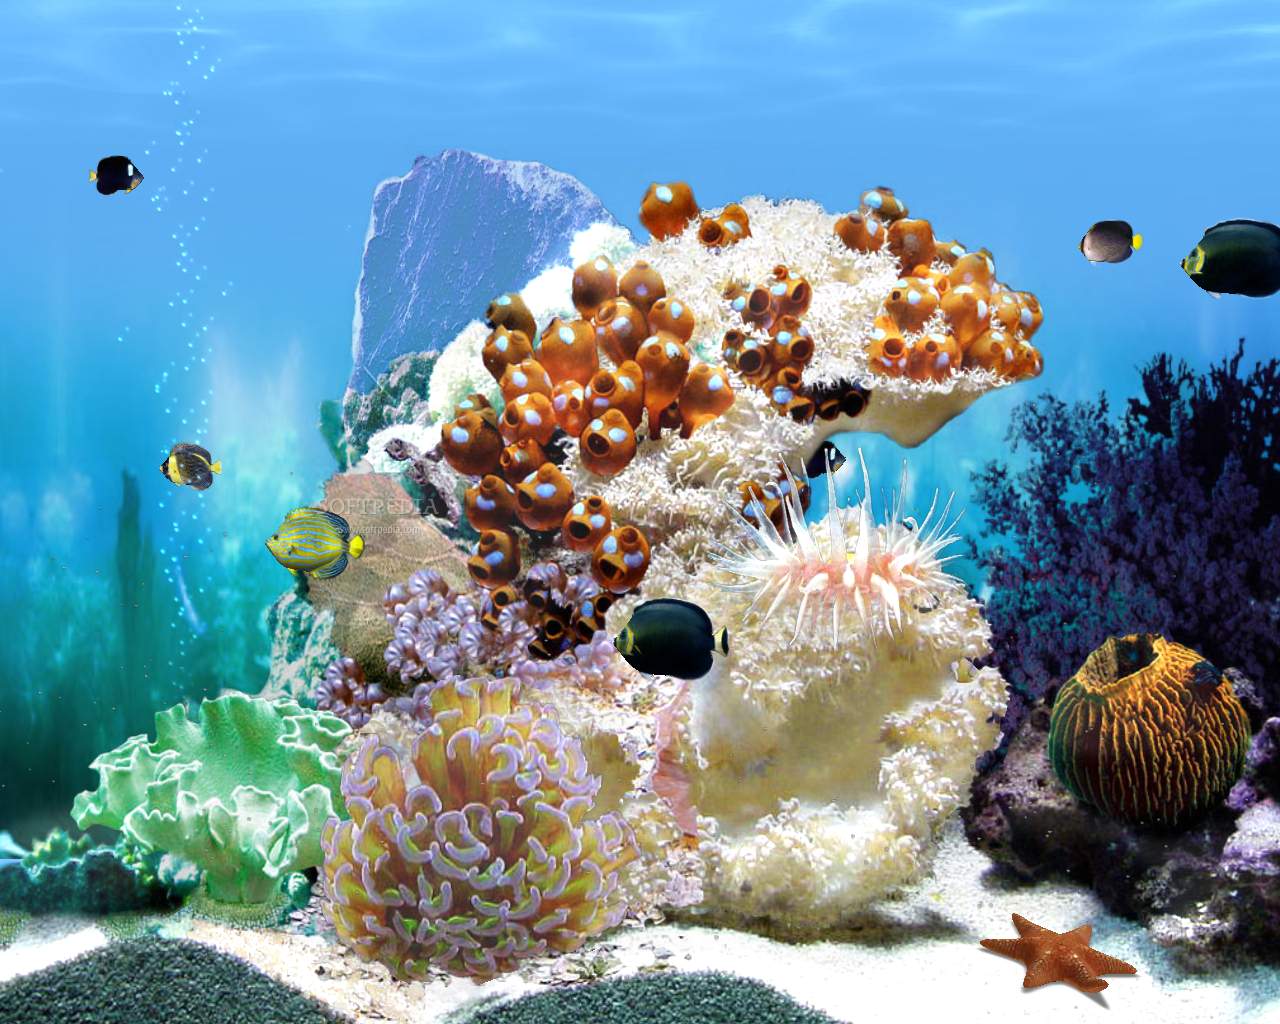 http://www.softpedia.com/screenshots/Amazing-3D-Aquarium-Free-ADDon-Chaetodontoplus-Fish-Pack_1.jpg